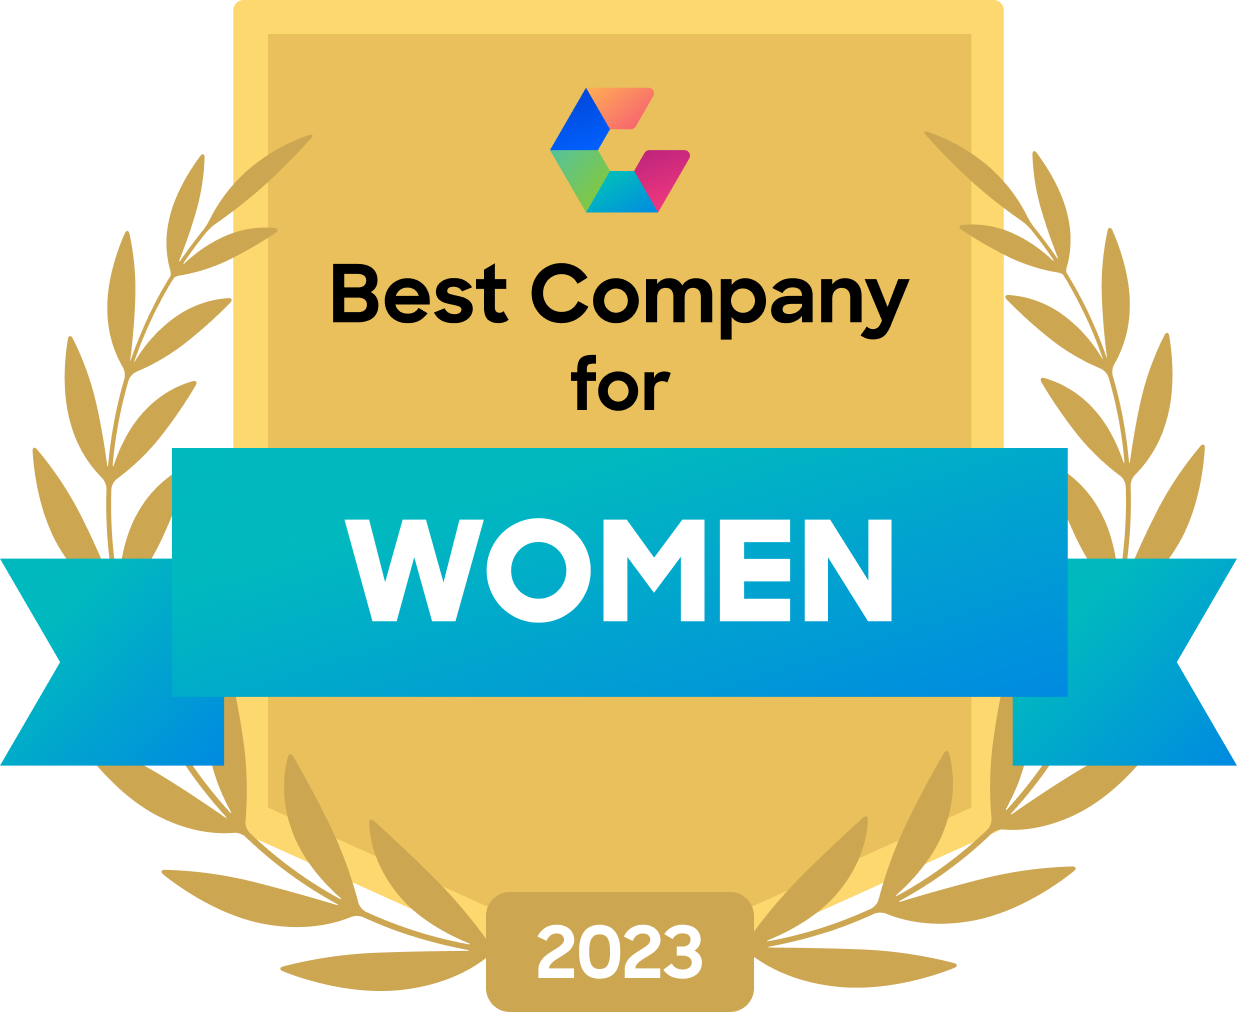 Best Company for Women Award